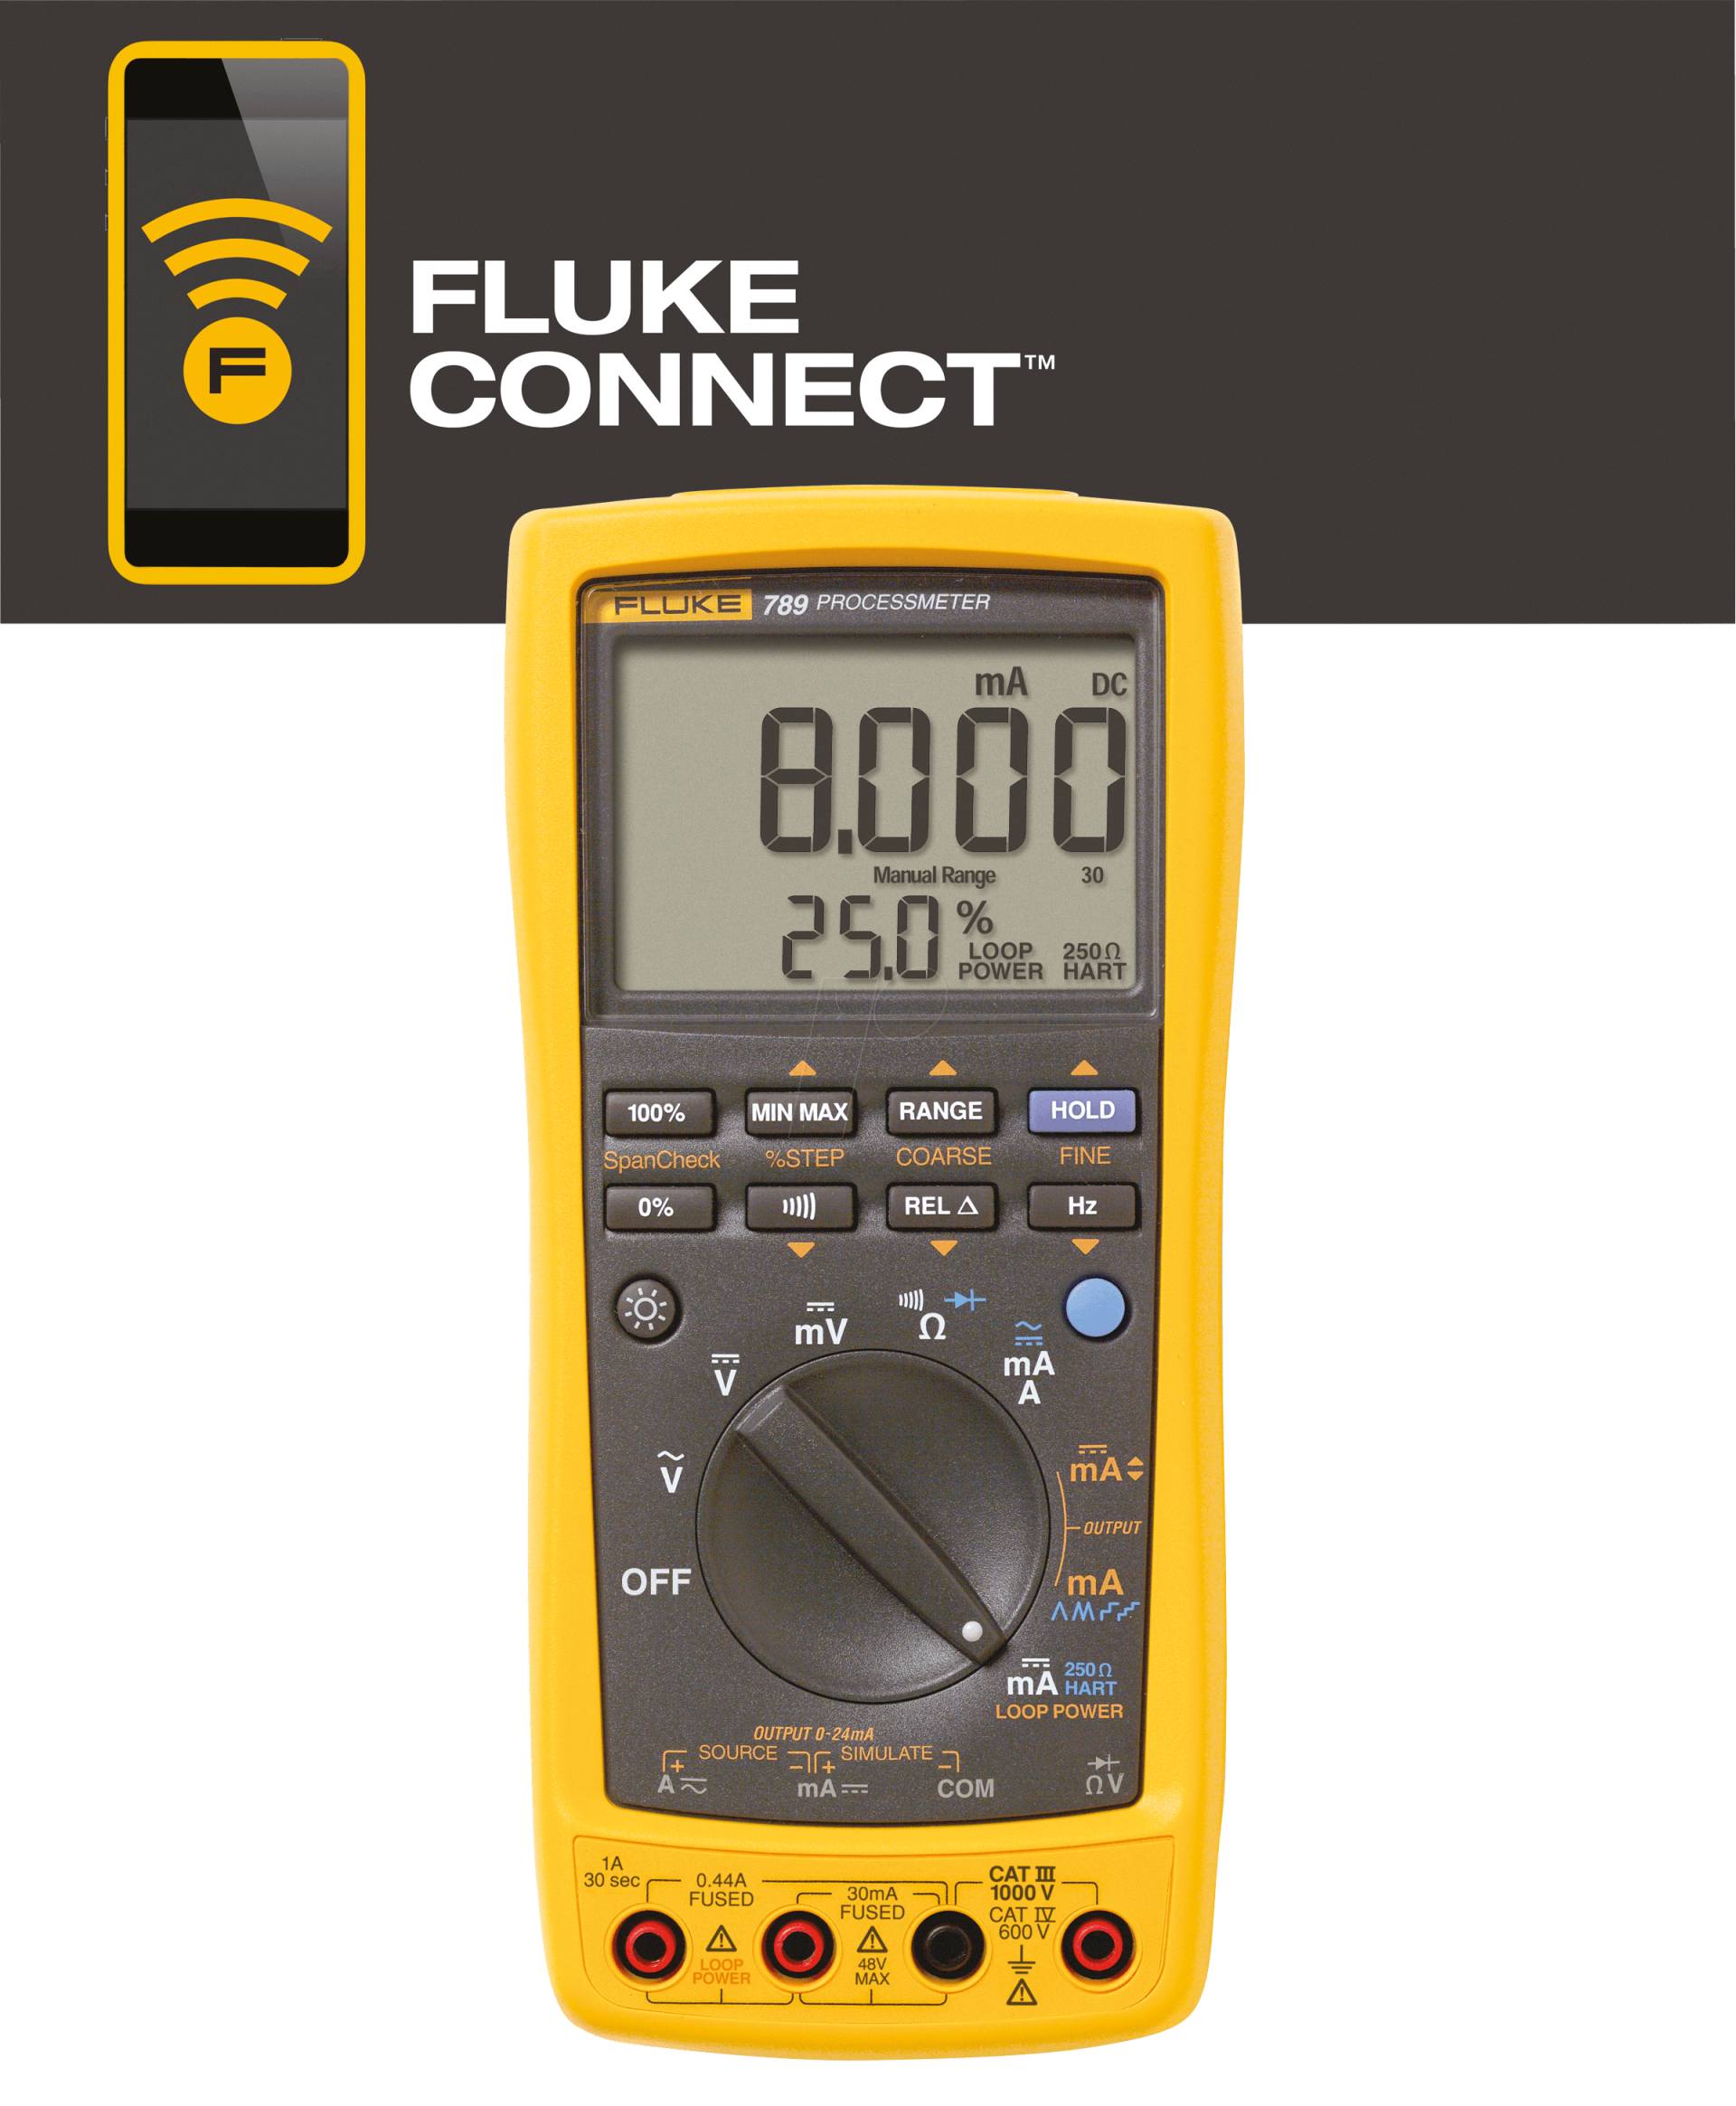 FLUKE 789 FC - Kalibrator mit integriertem Digital-Multimeter, ProcessMeter 789 von Fluke